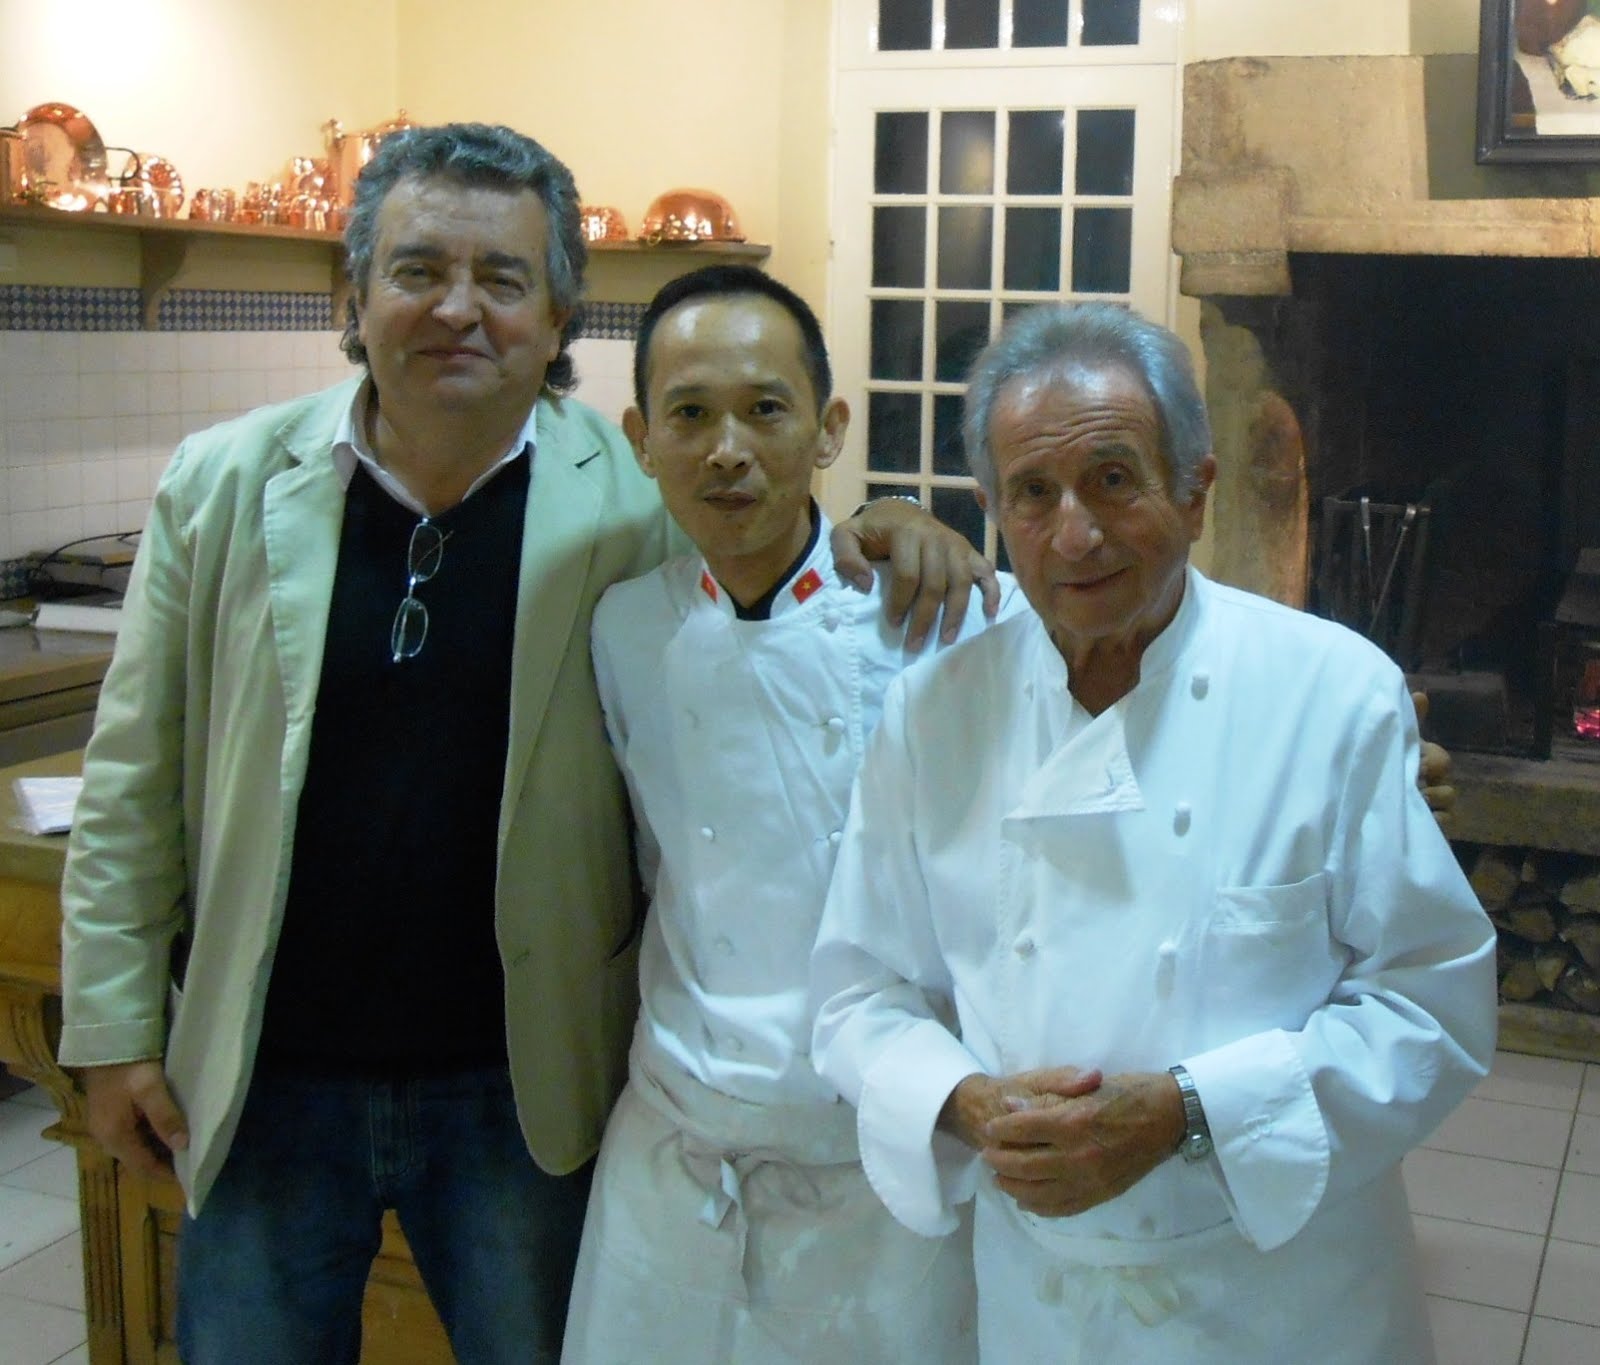 Chef David THAI at Michel GUERARD